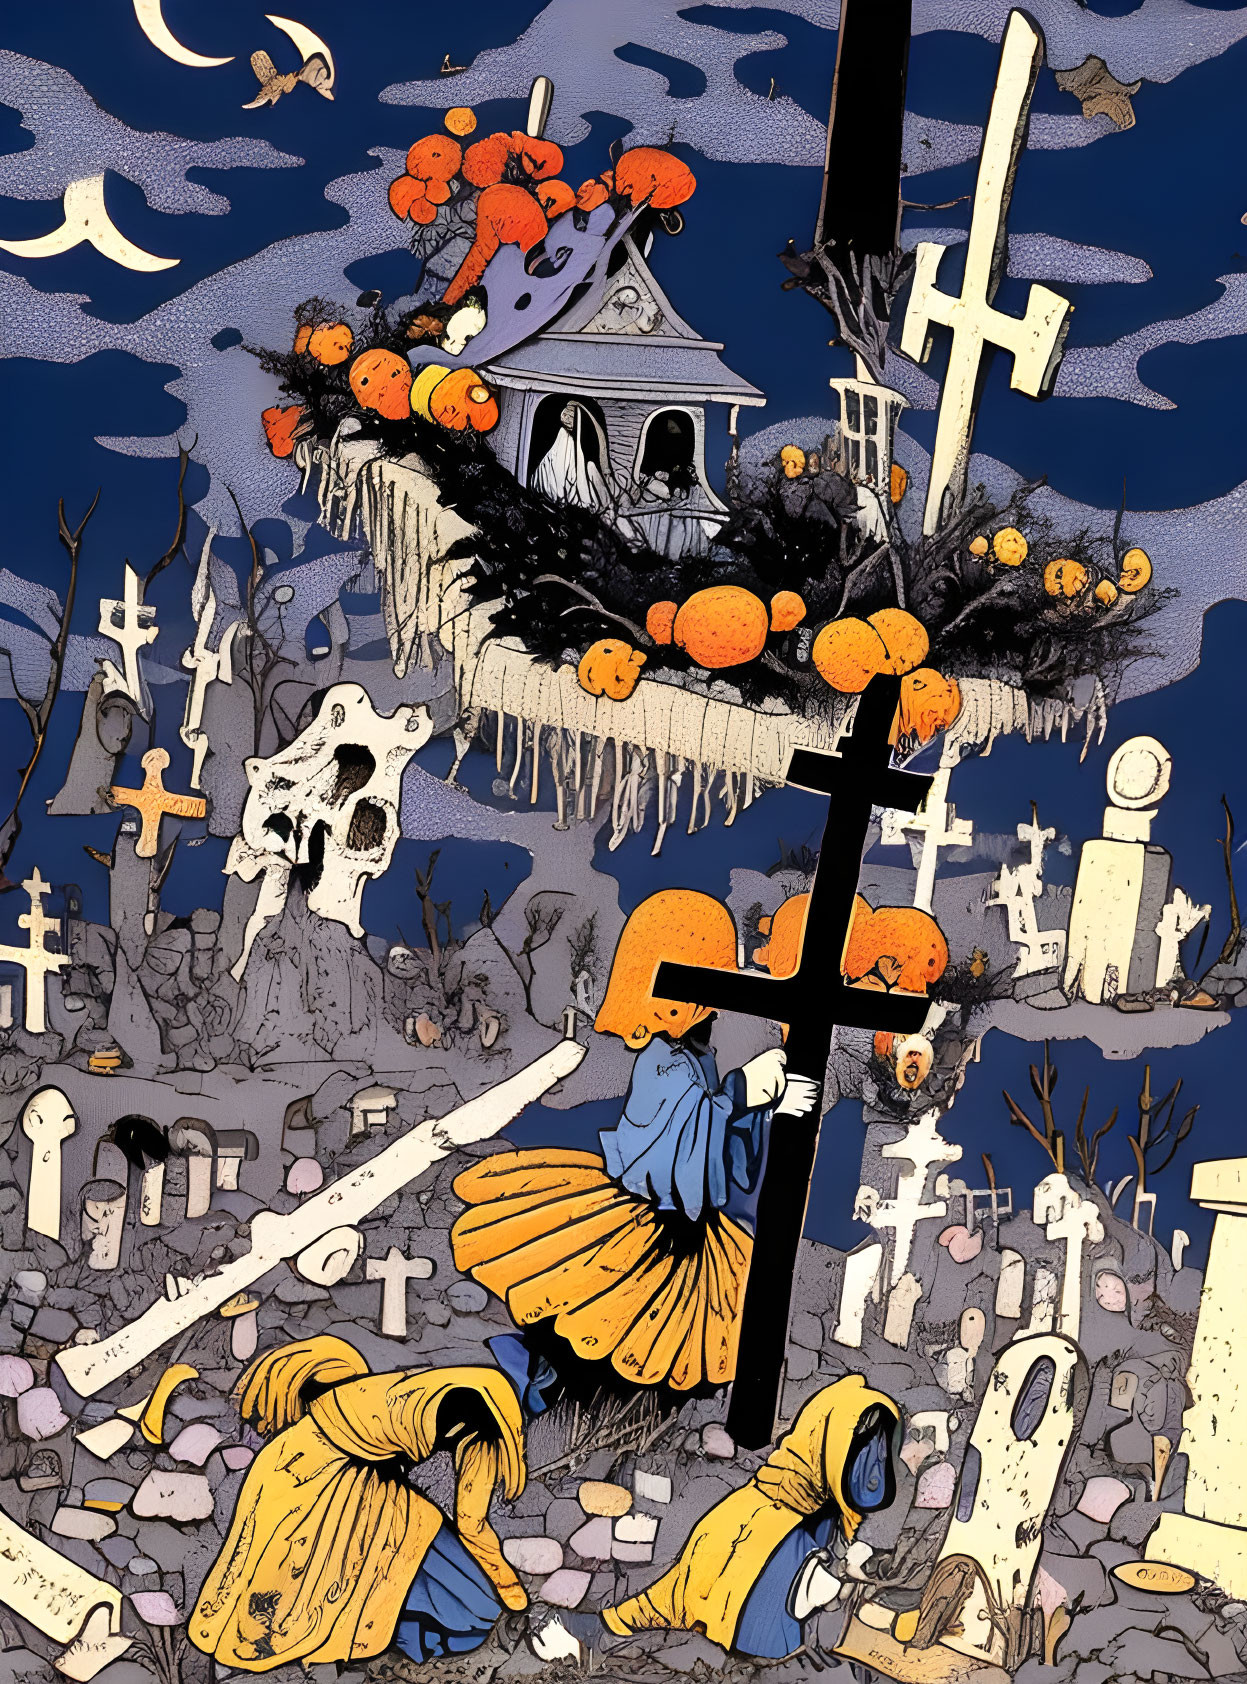 Spooky graveyard illustration with floating pumpkins and broomstick figure